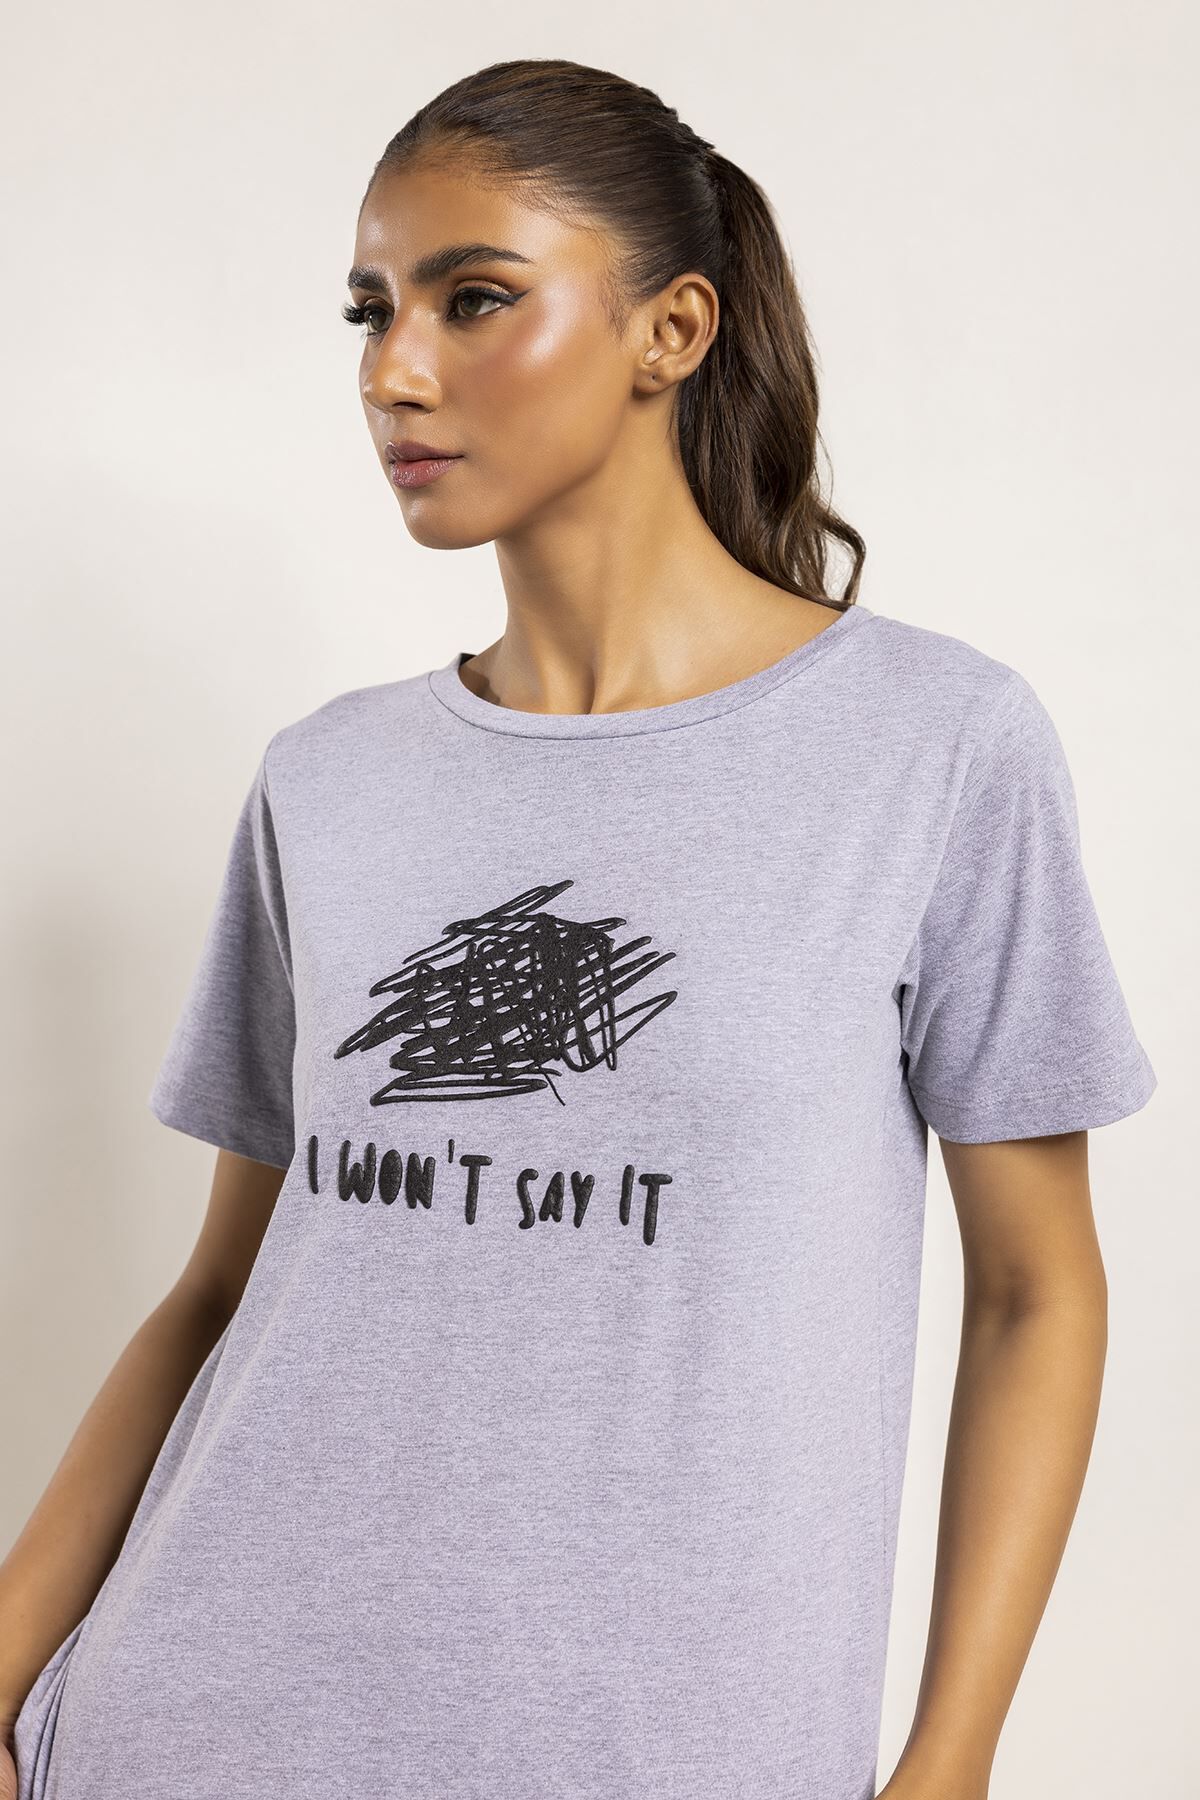 Khaadi Women's Shirts Collection - Shop Online | Khaadi